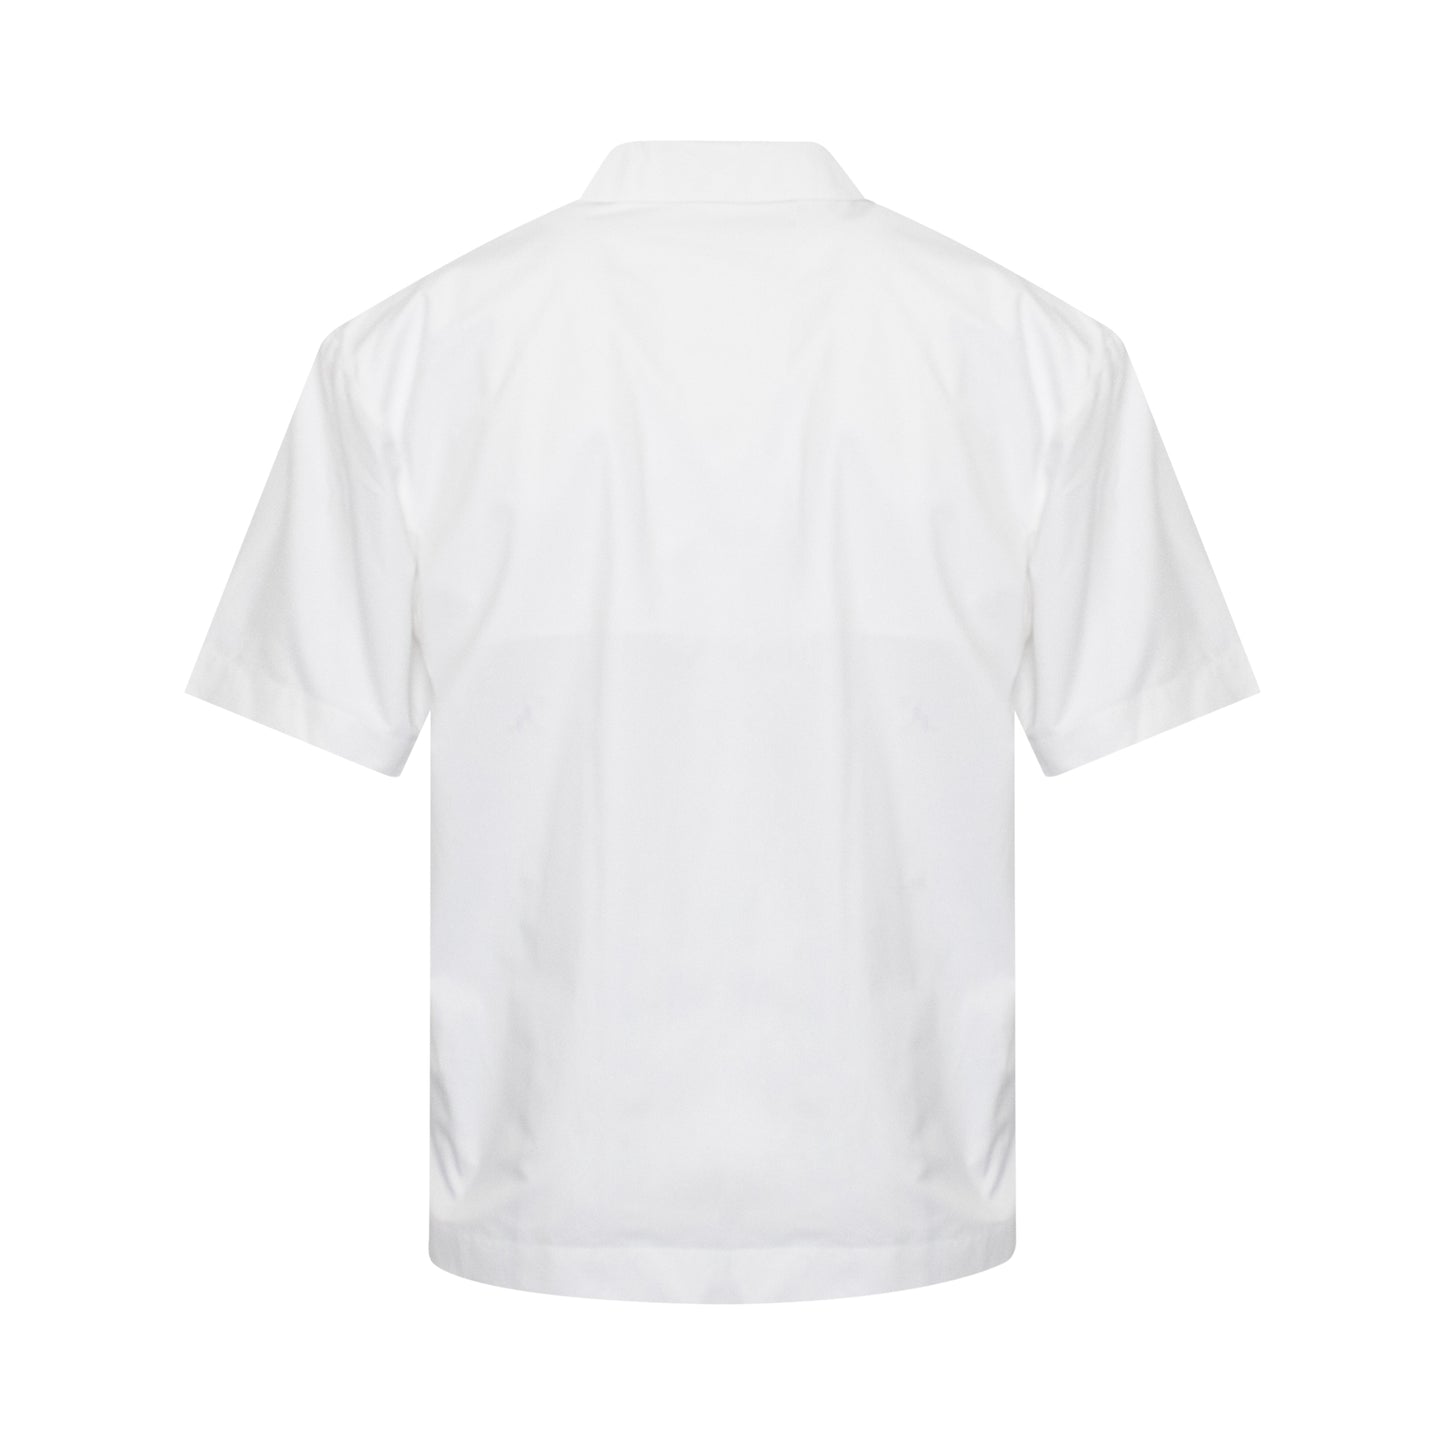 Juggler Pin Up Bowling Shirt in White